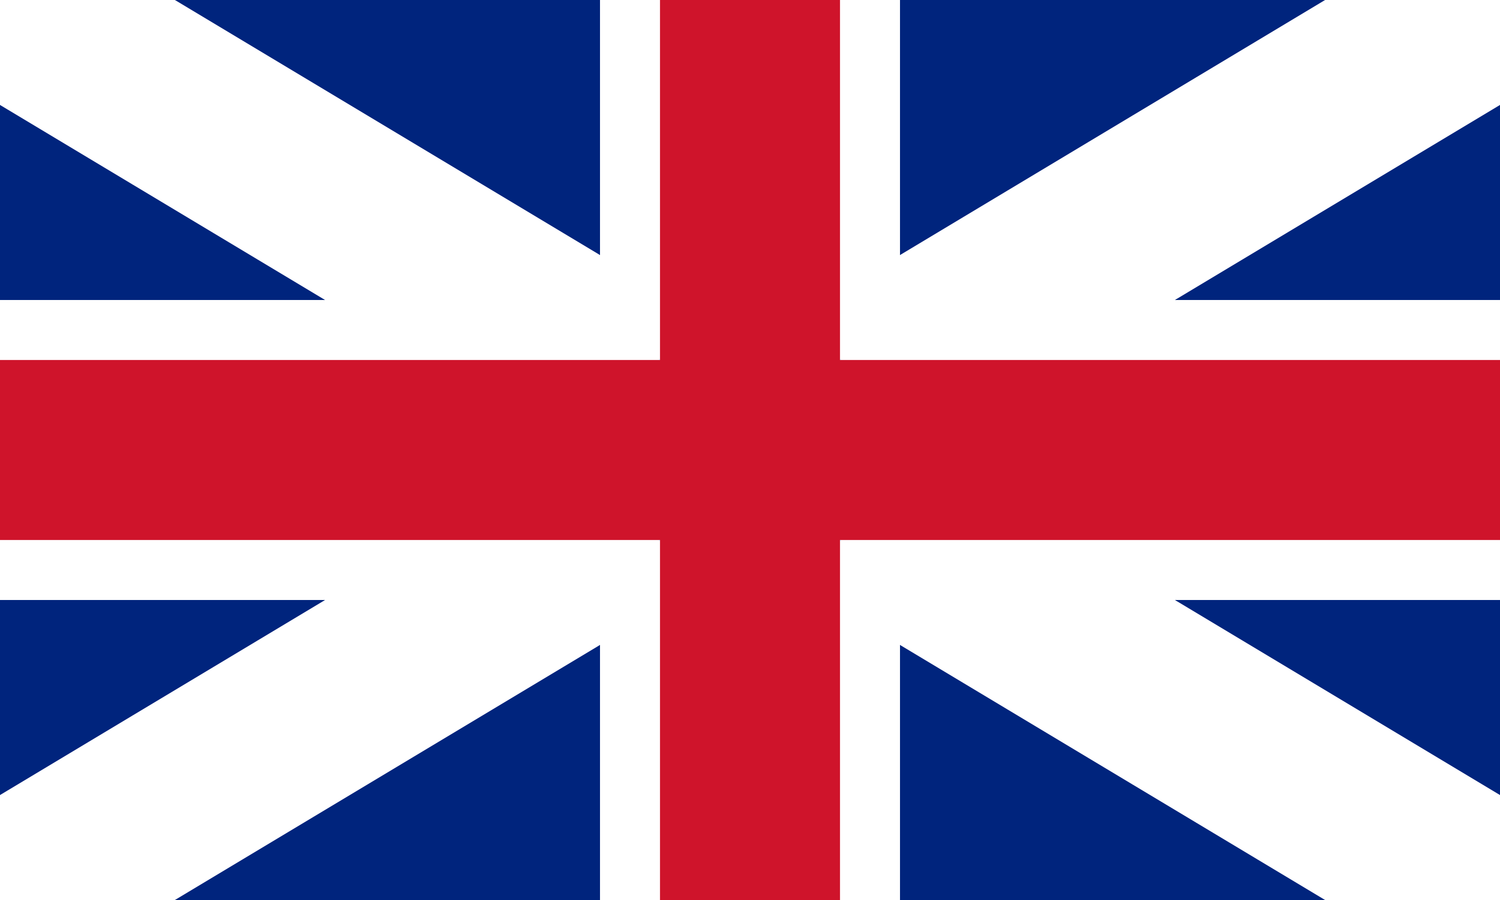 Großbritannien (UK)